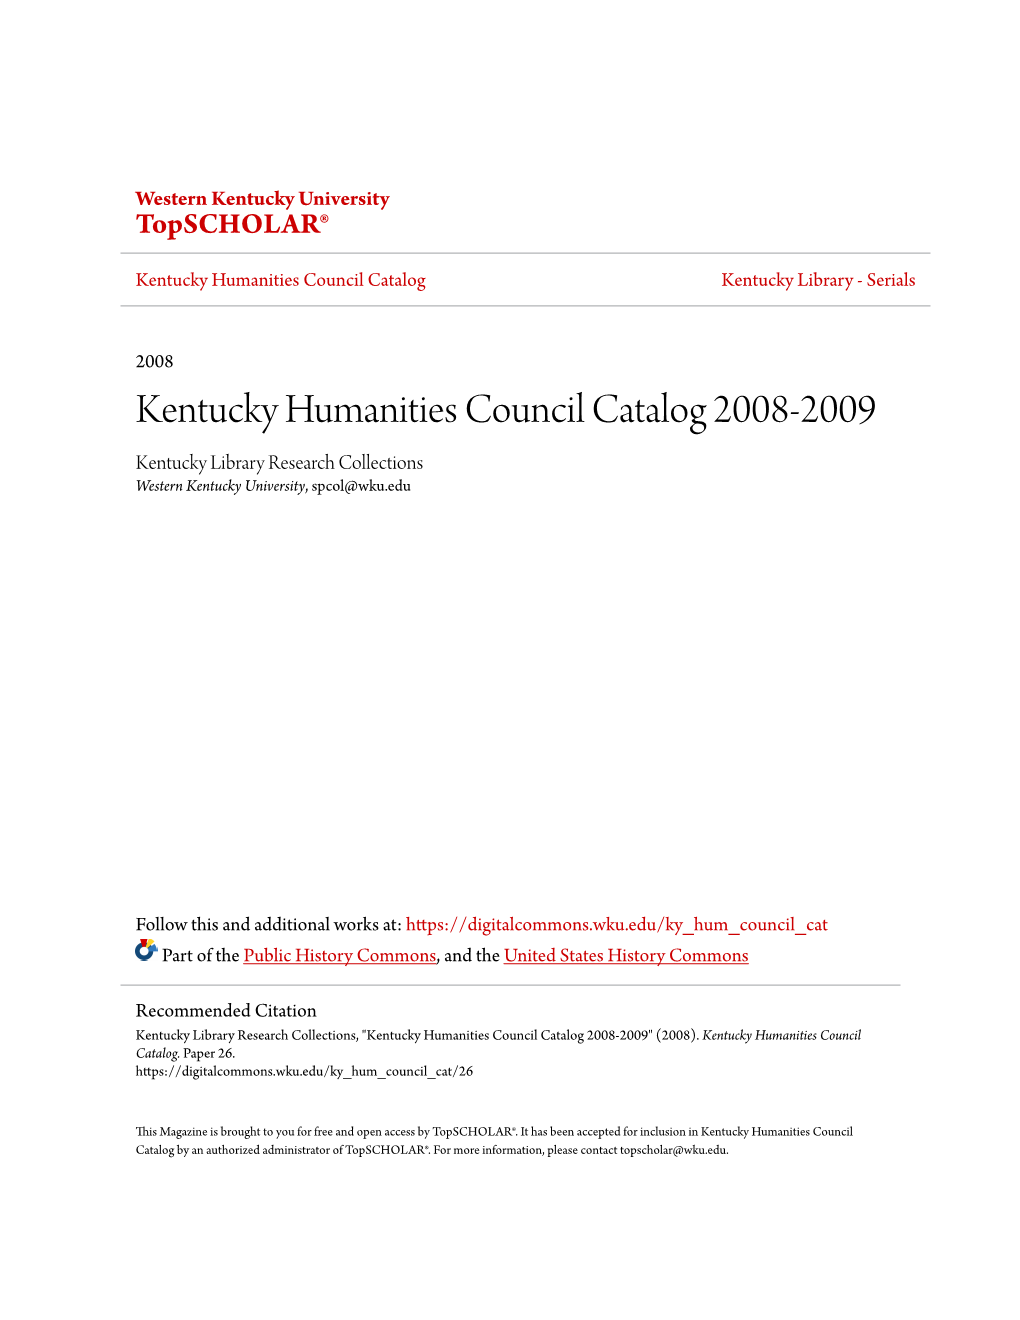 Kentucky Humanities Council Catalog 2008-2009 Kentucky Library Research Collections Western Kentucky University, Spcol@Wku.Edu